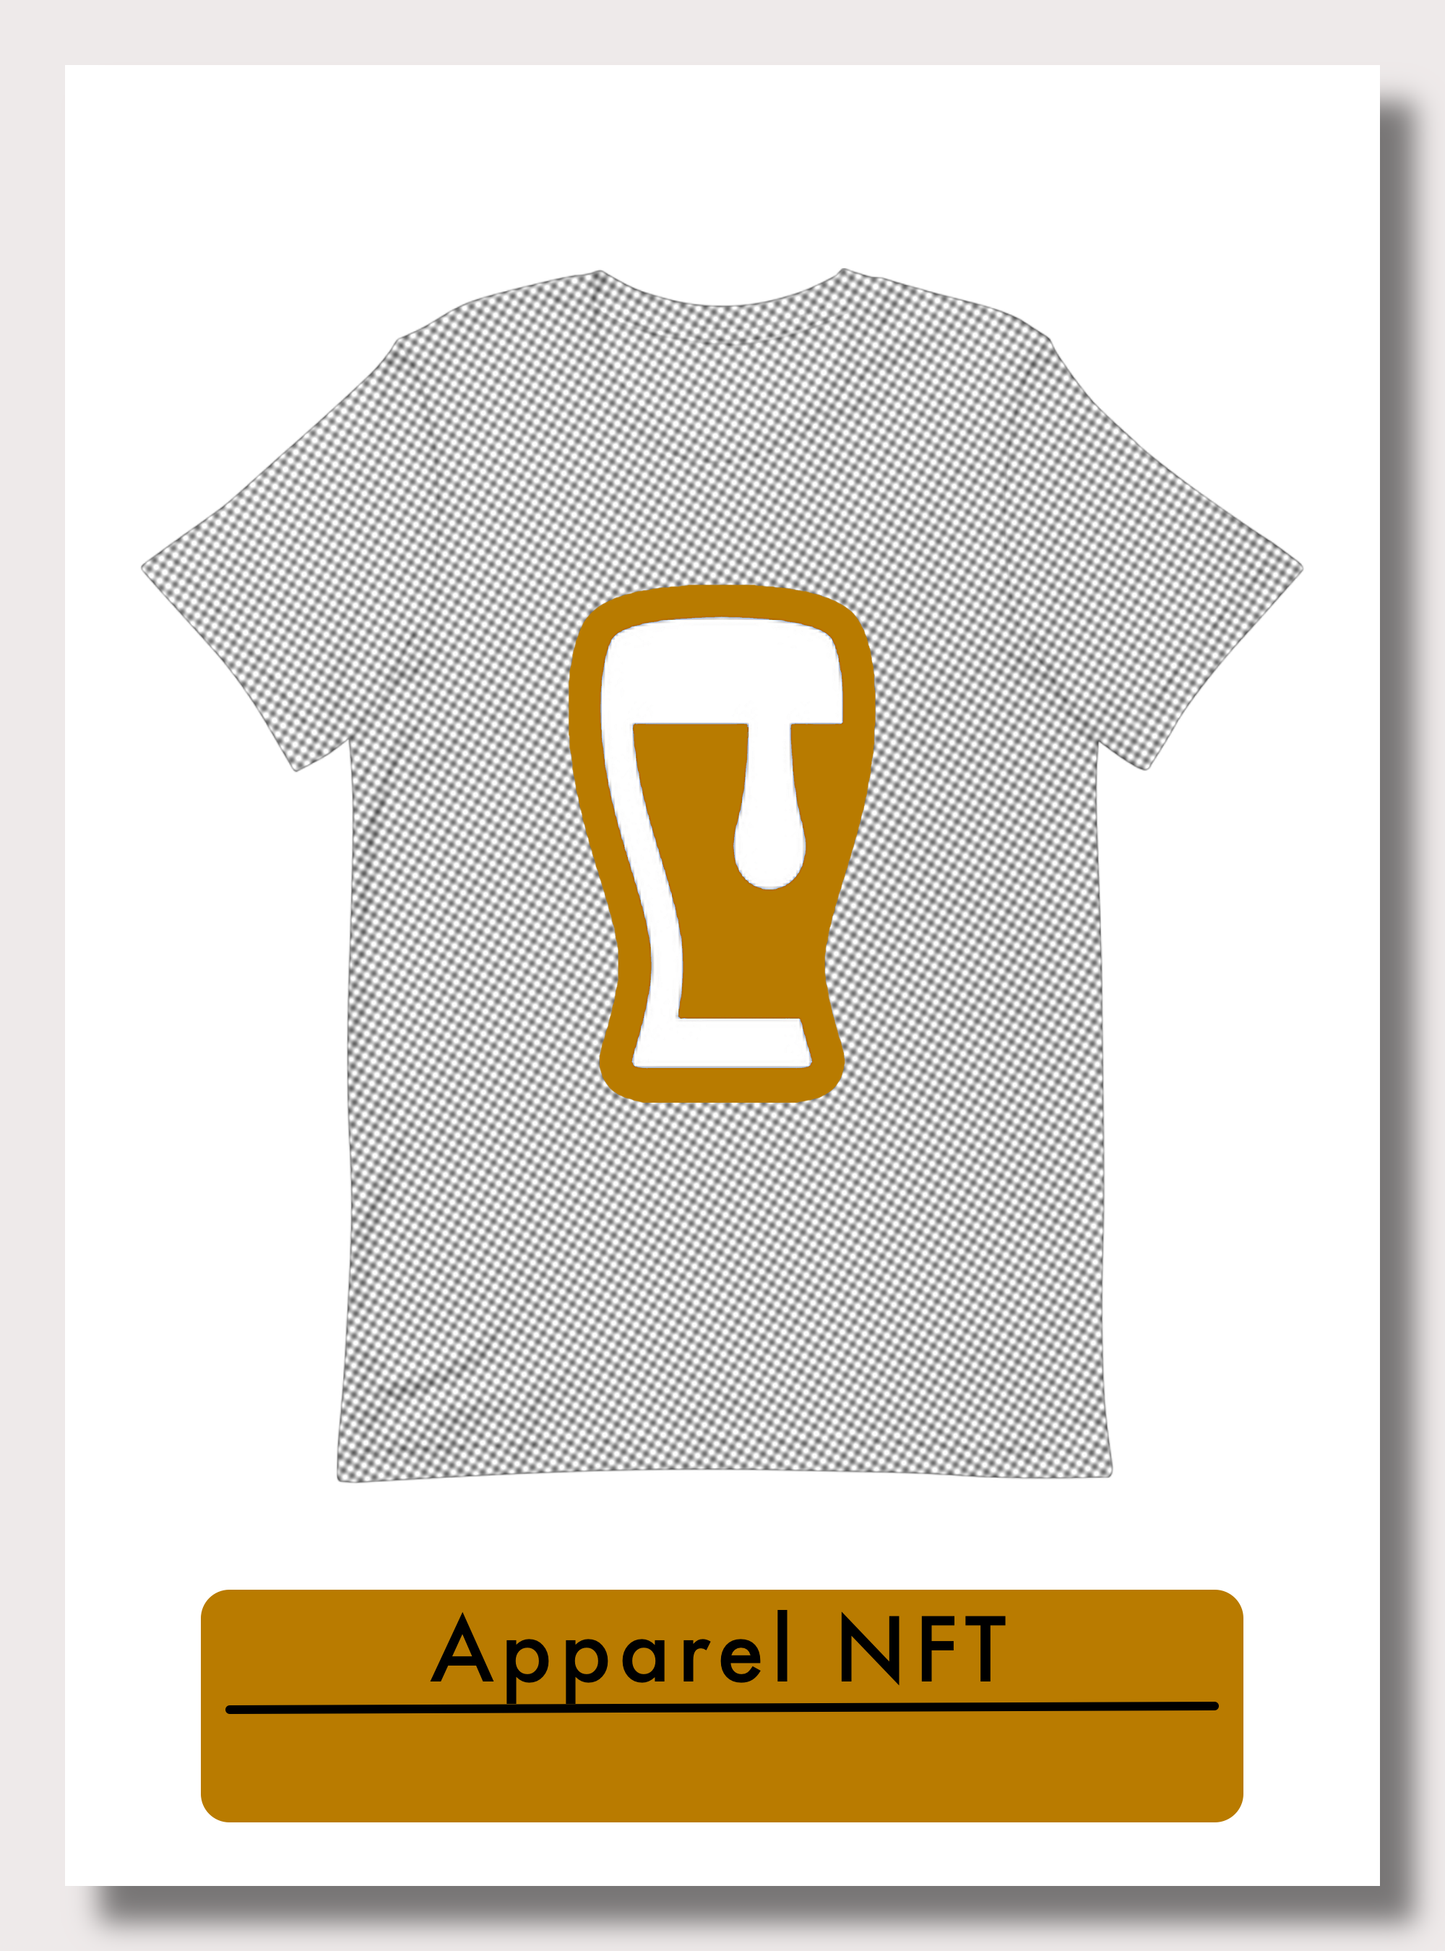 Beer Apparel NFT